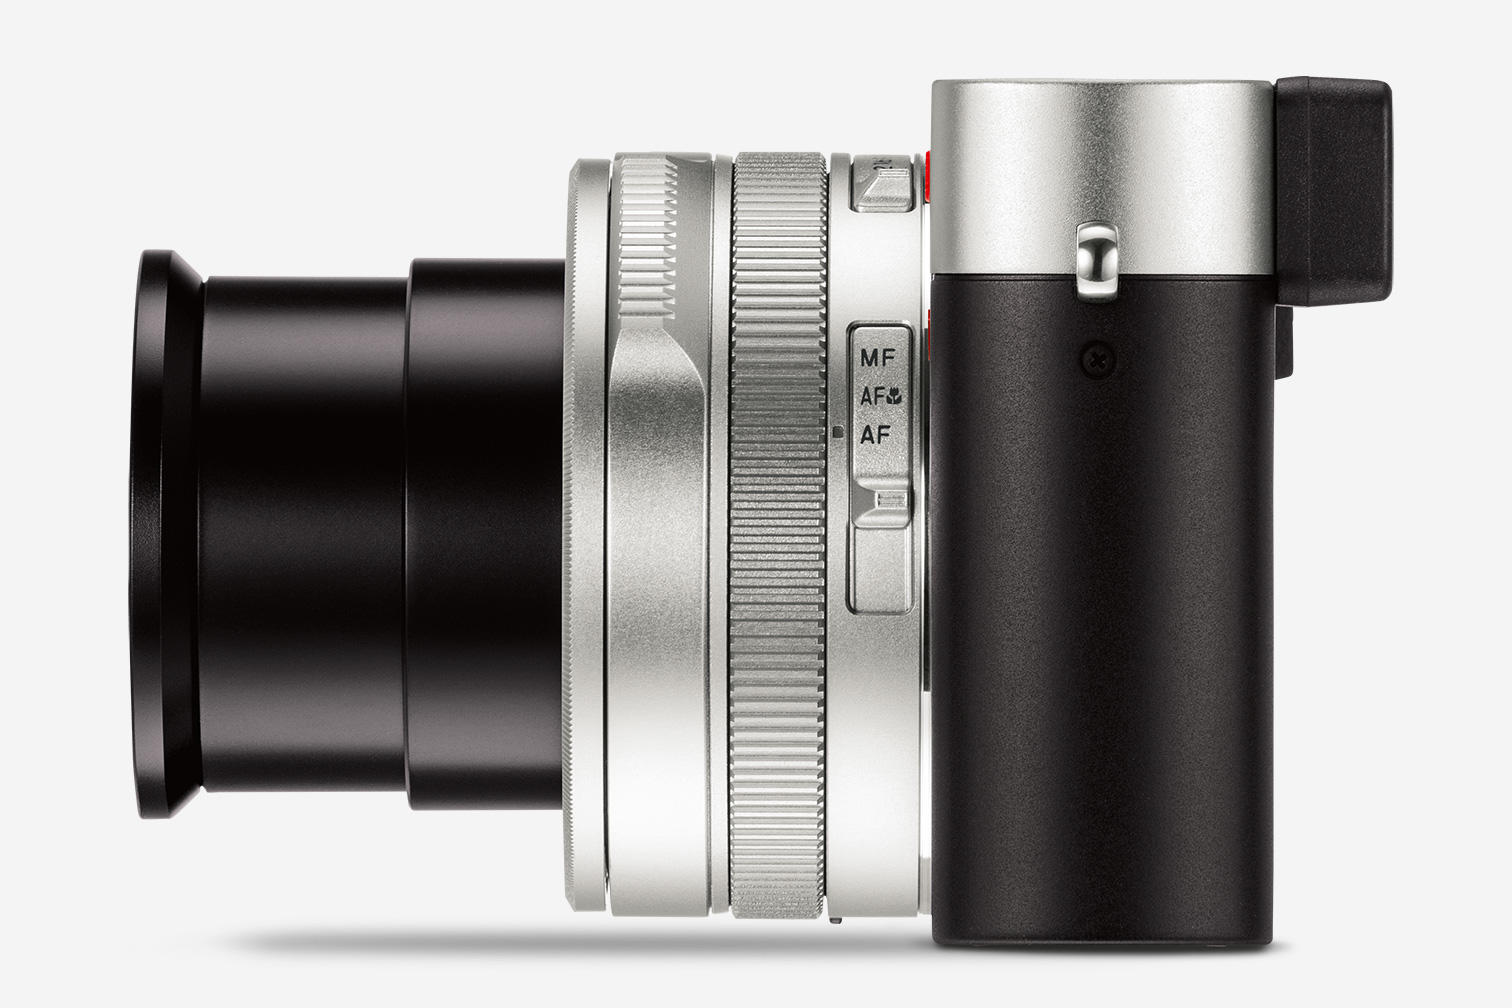 Leica-D-Lux-7-left-|-1512x1008-BG-f4f4f4_teaser-2632x1756